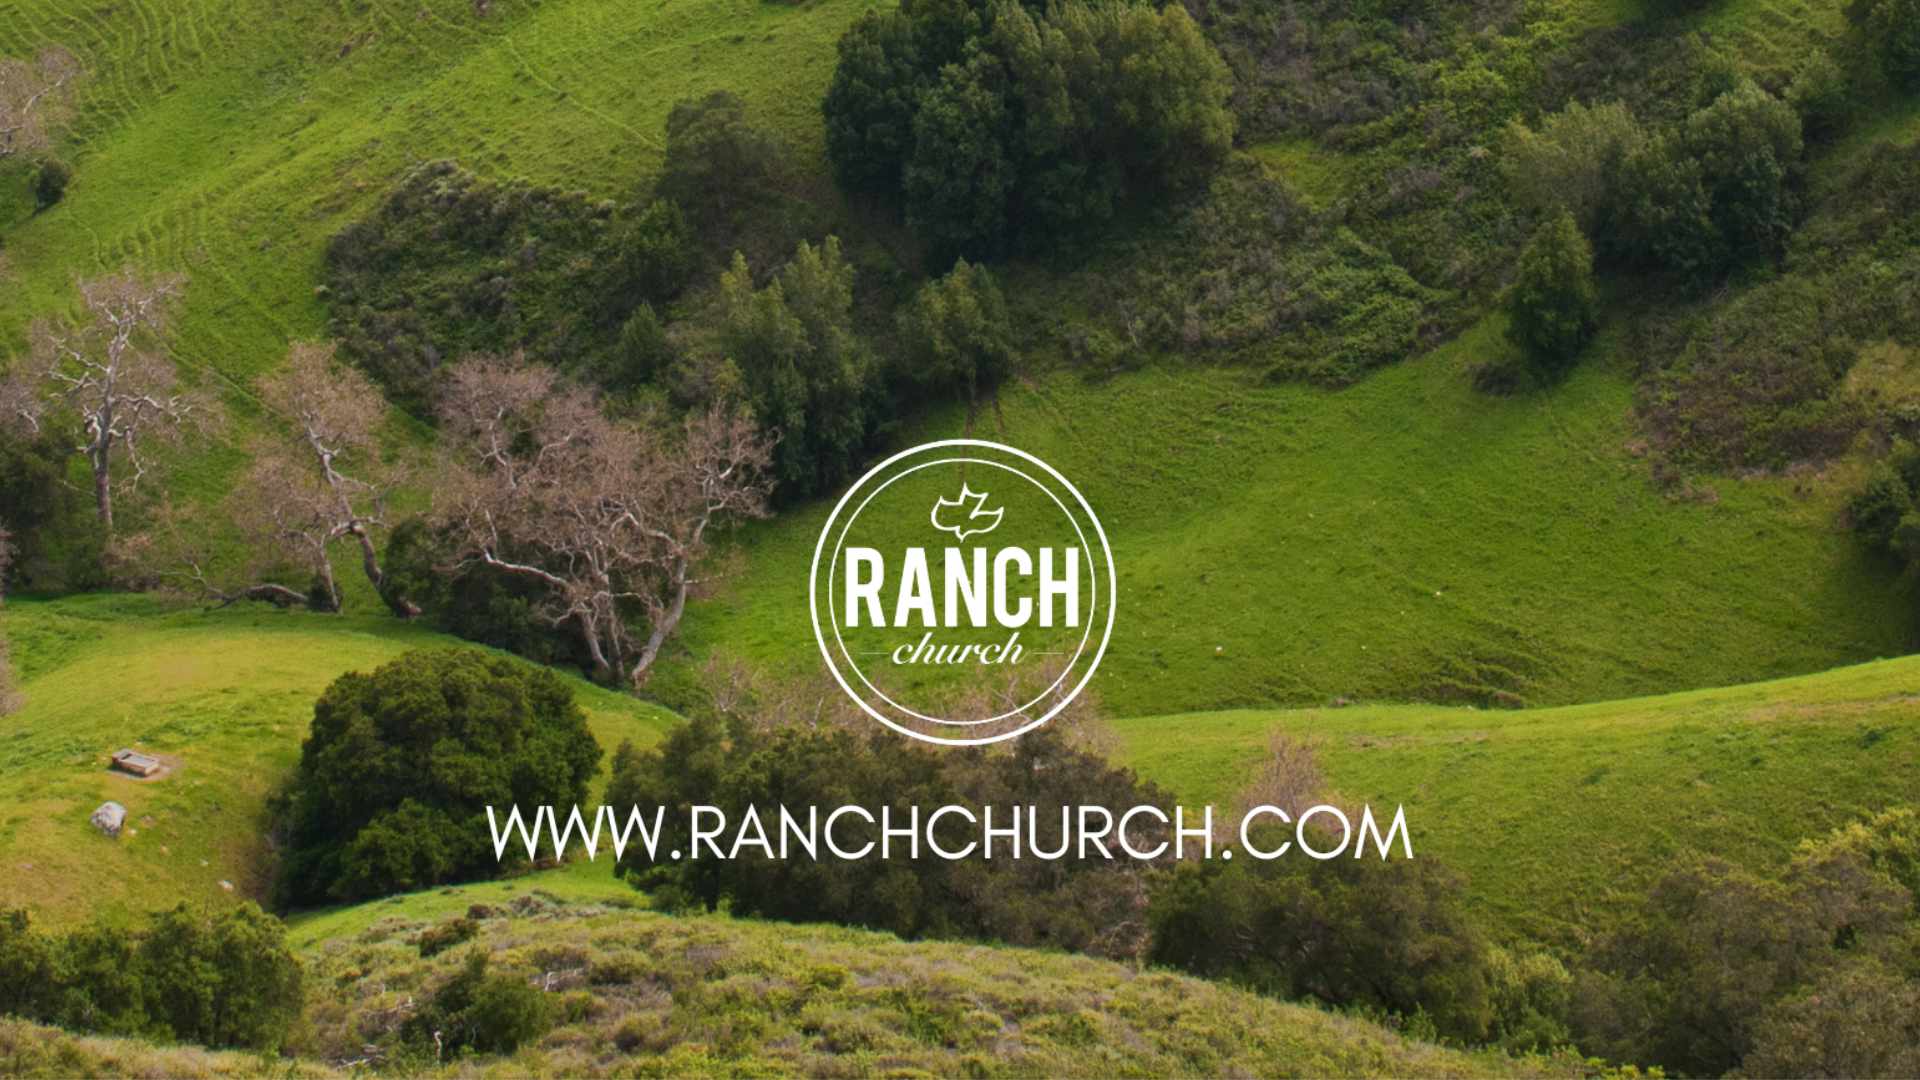 The Ranch Church